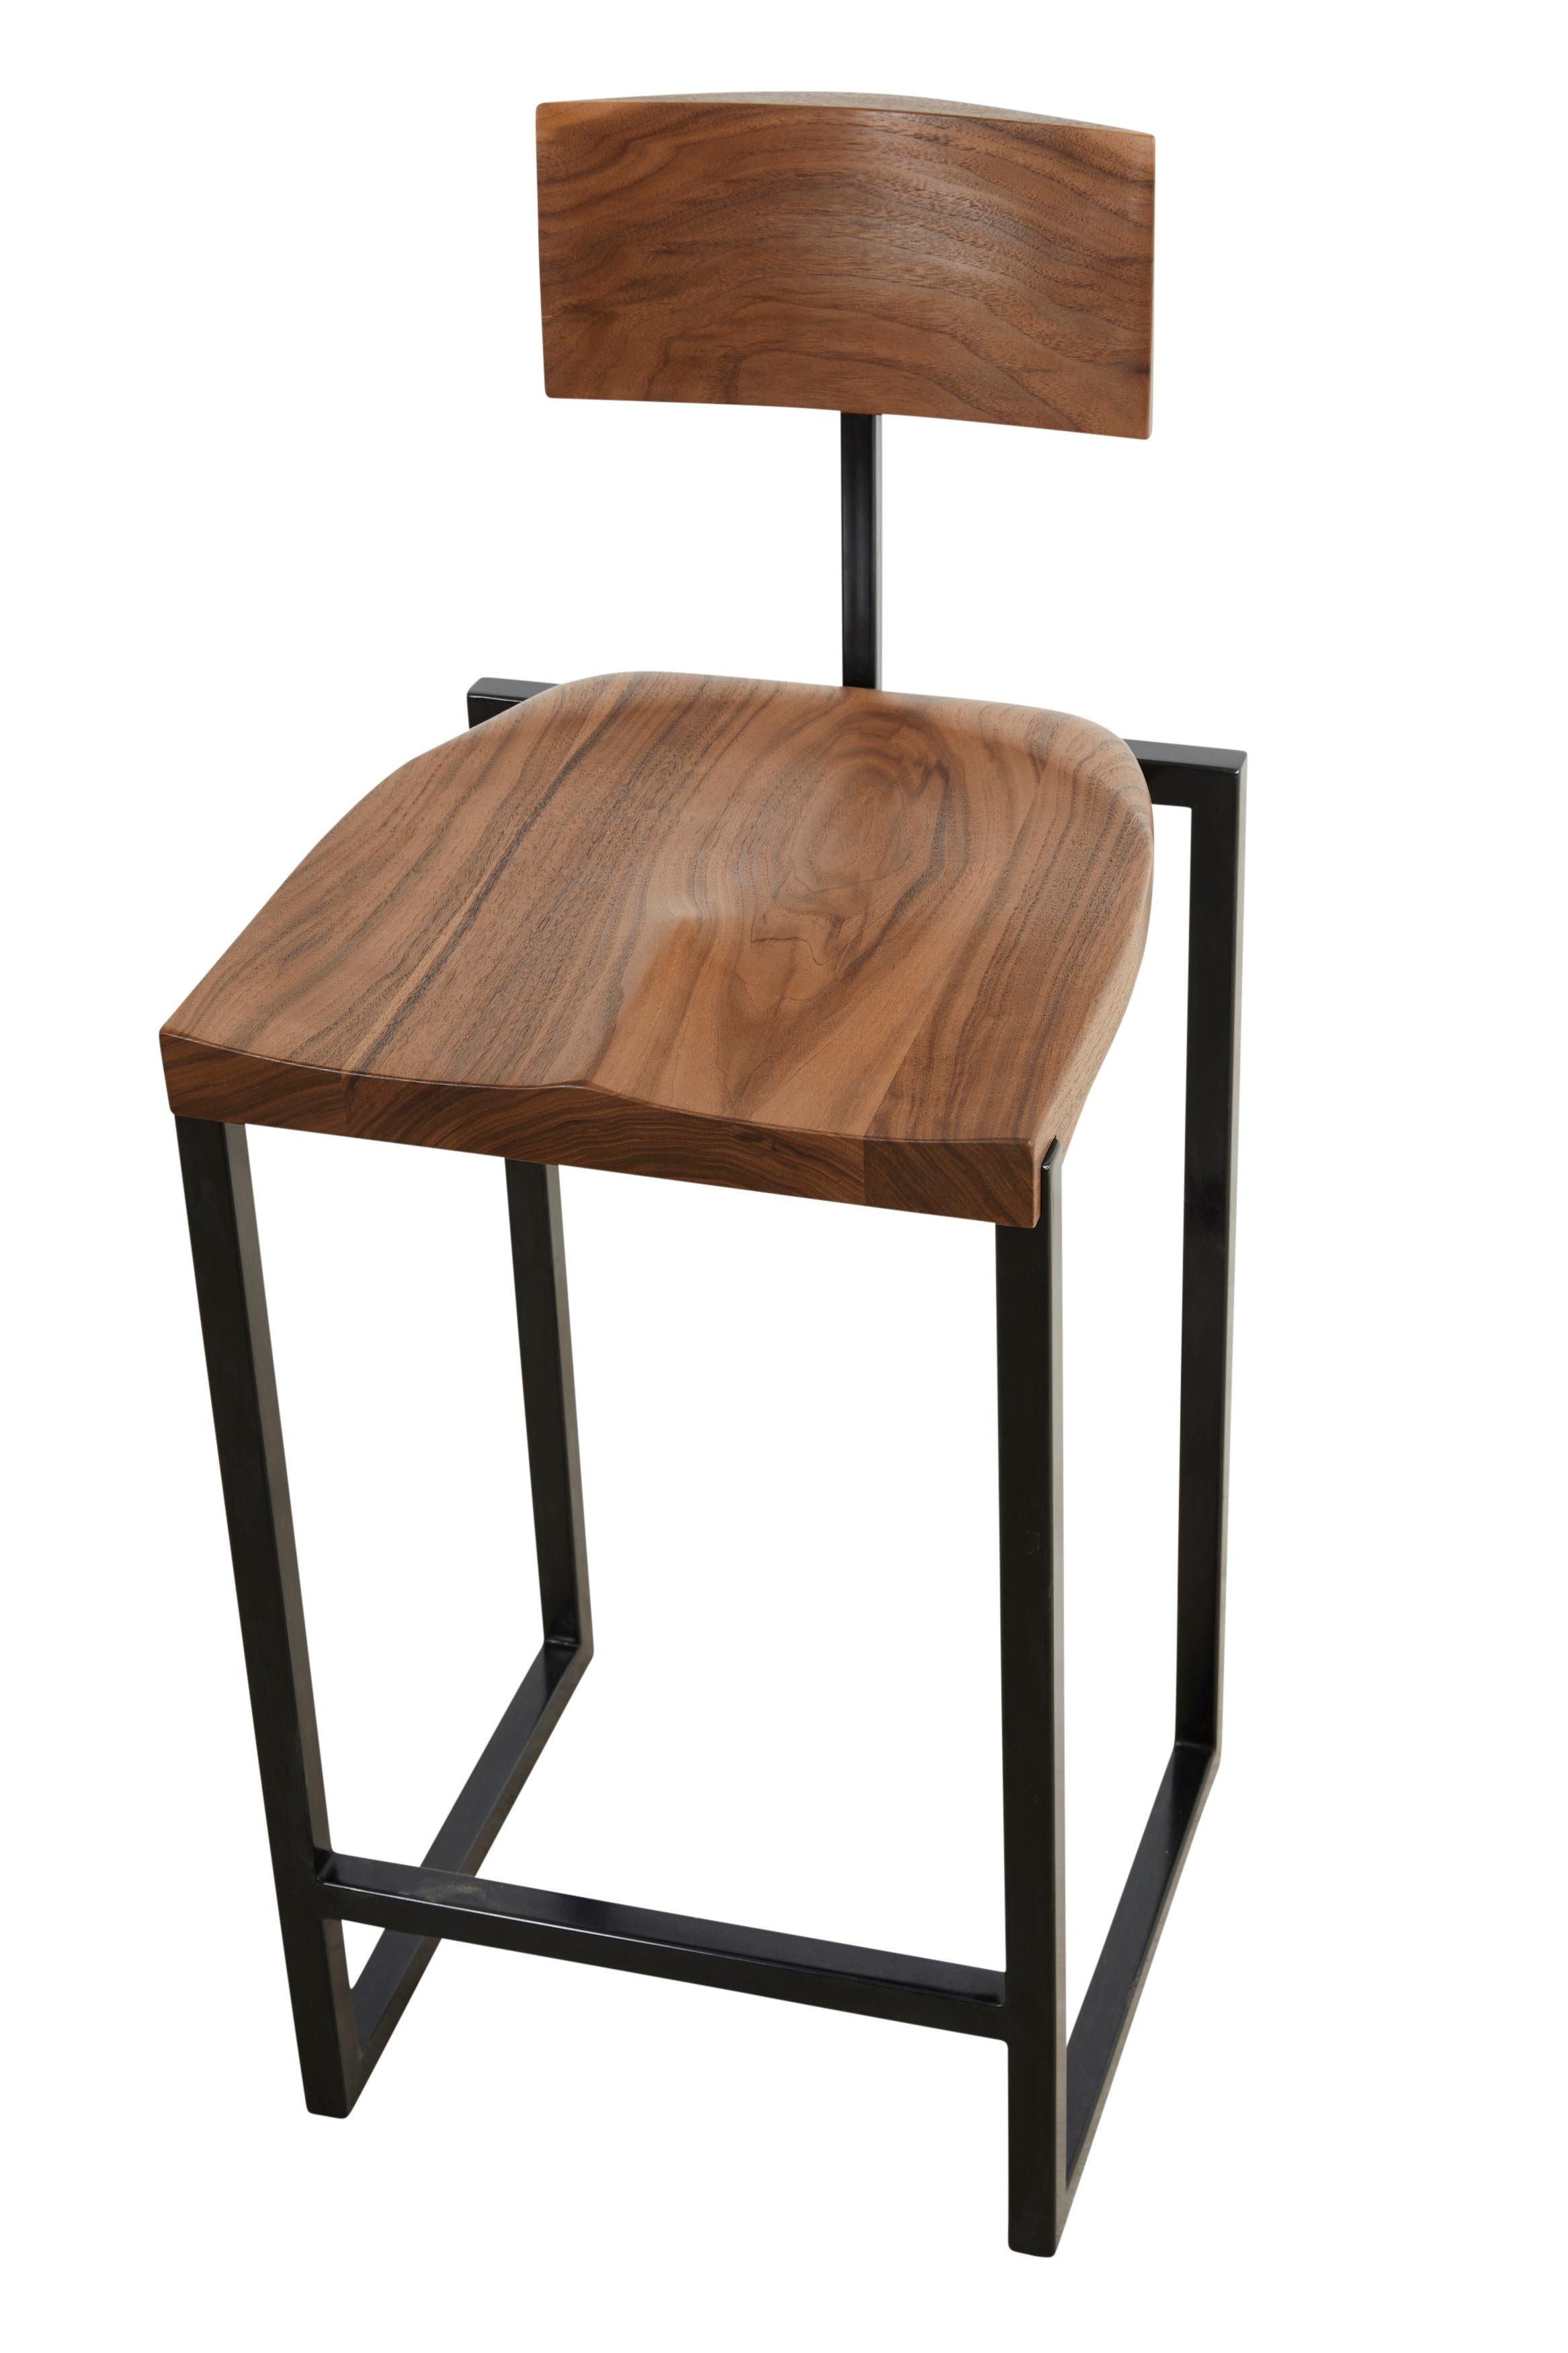 hand shaped bar stools